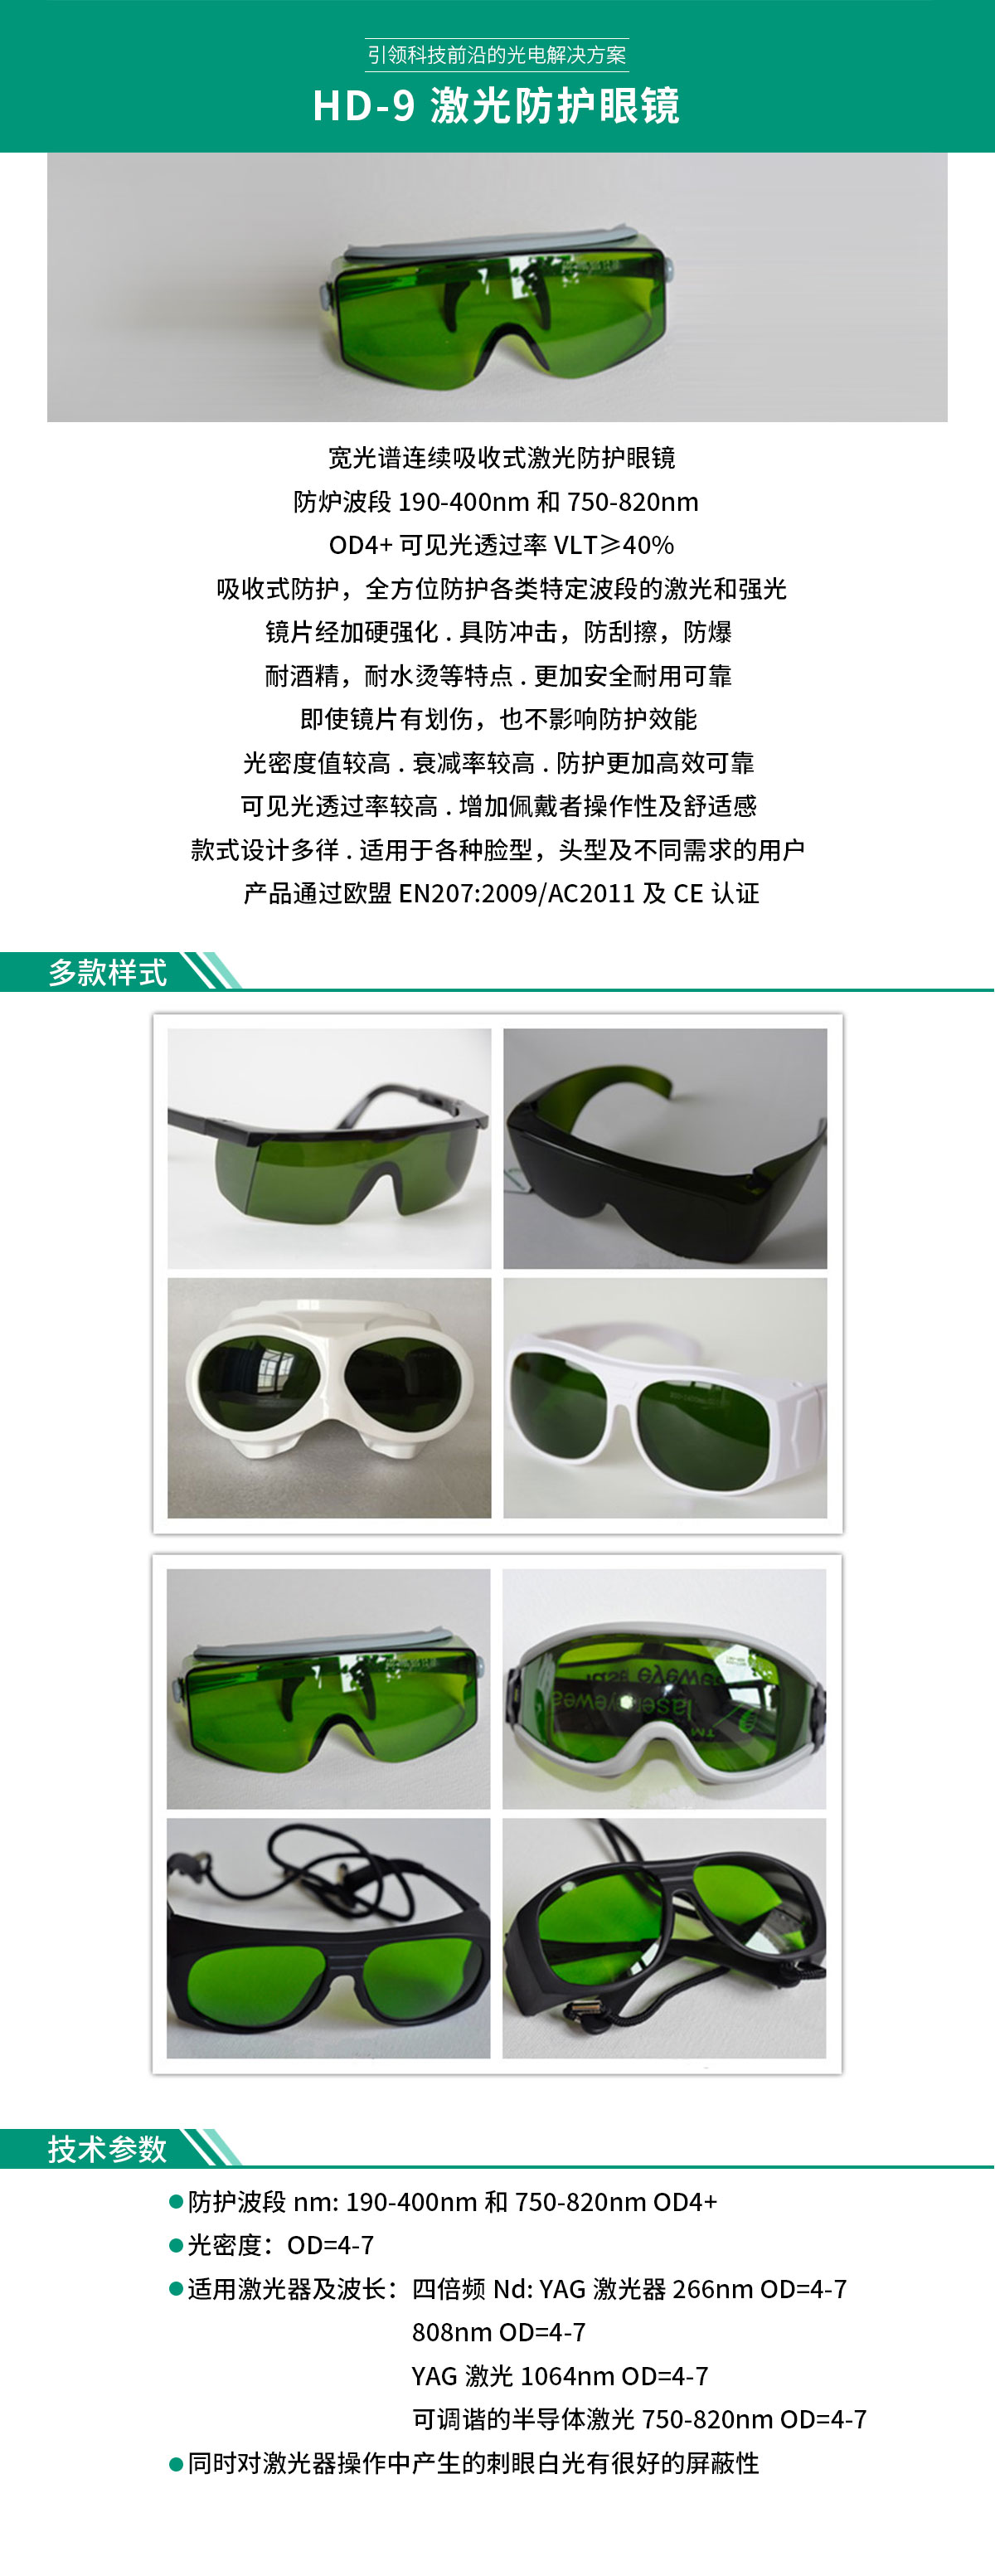 HD-9-激光防護眼鏡